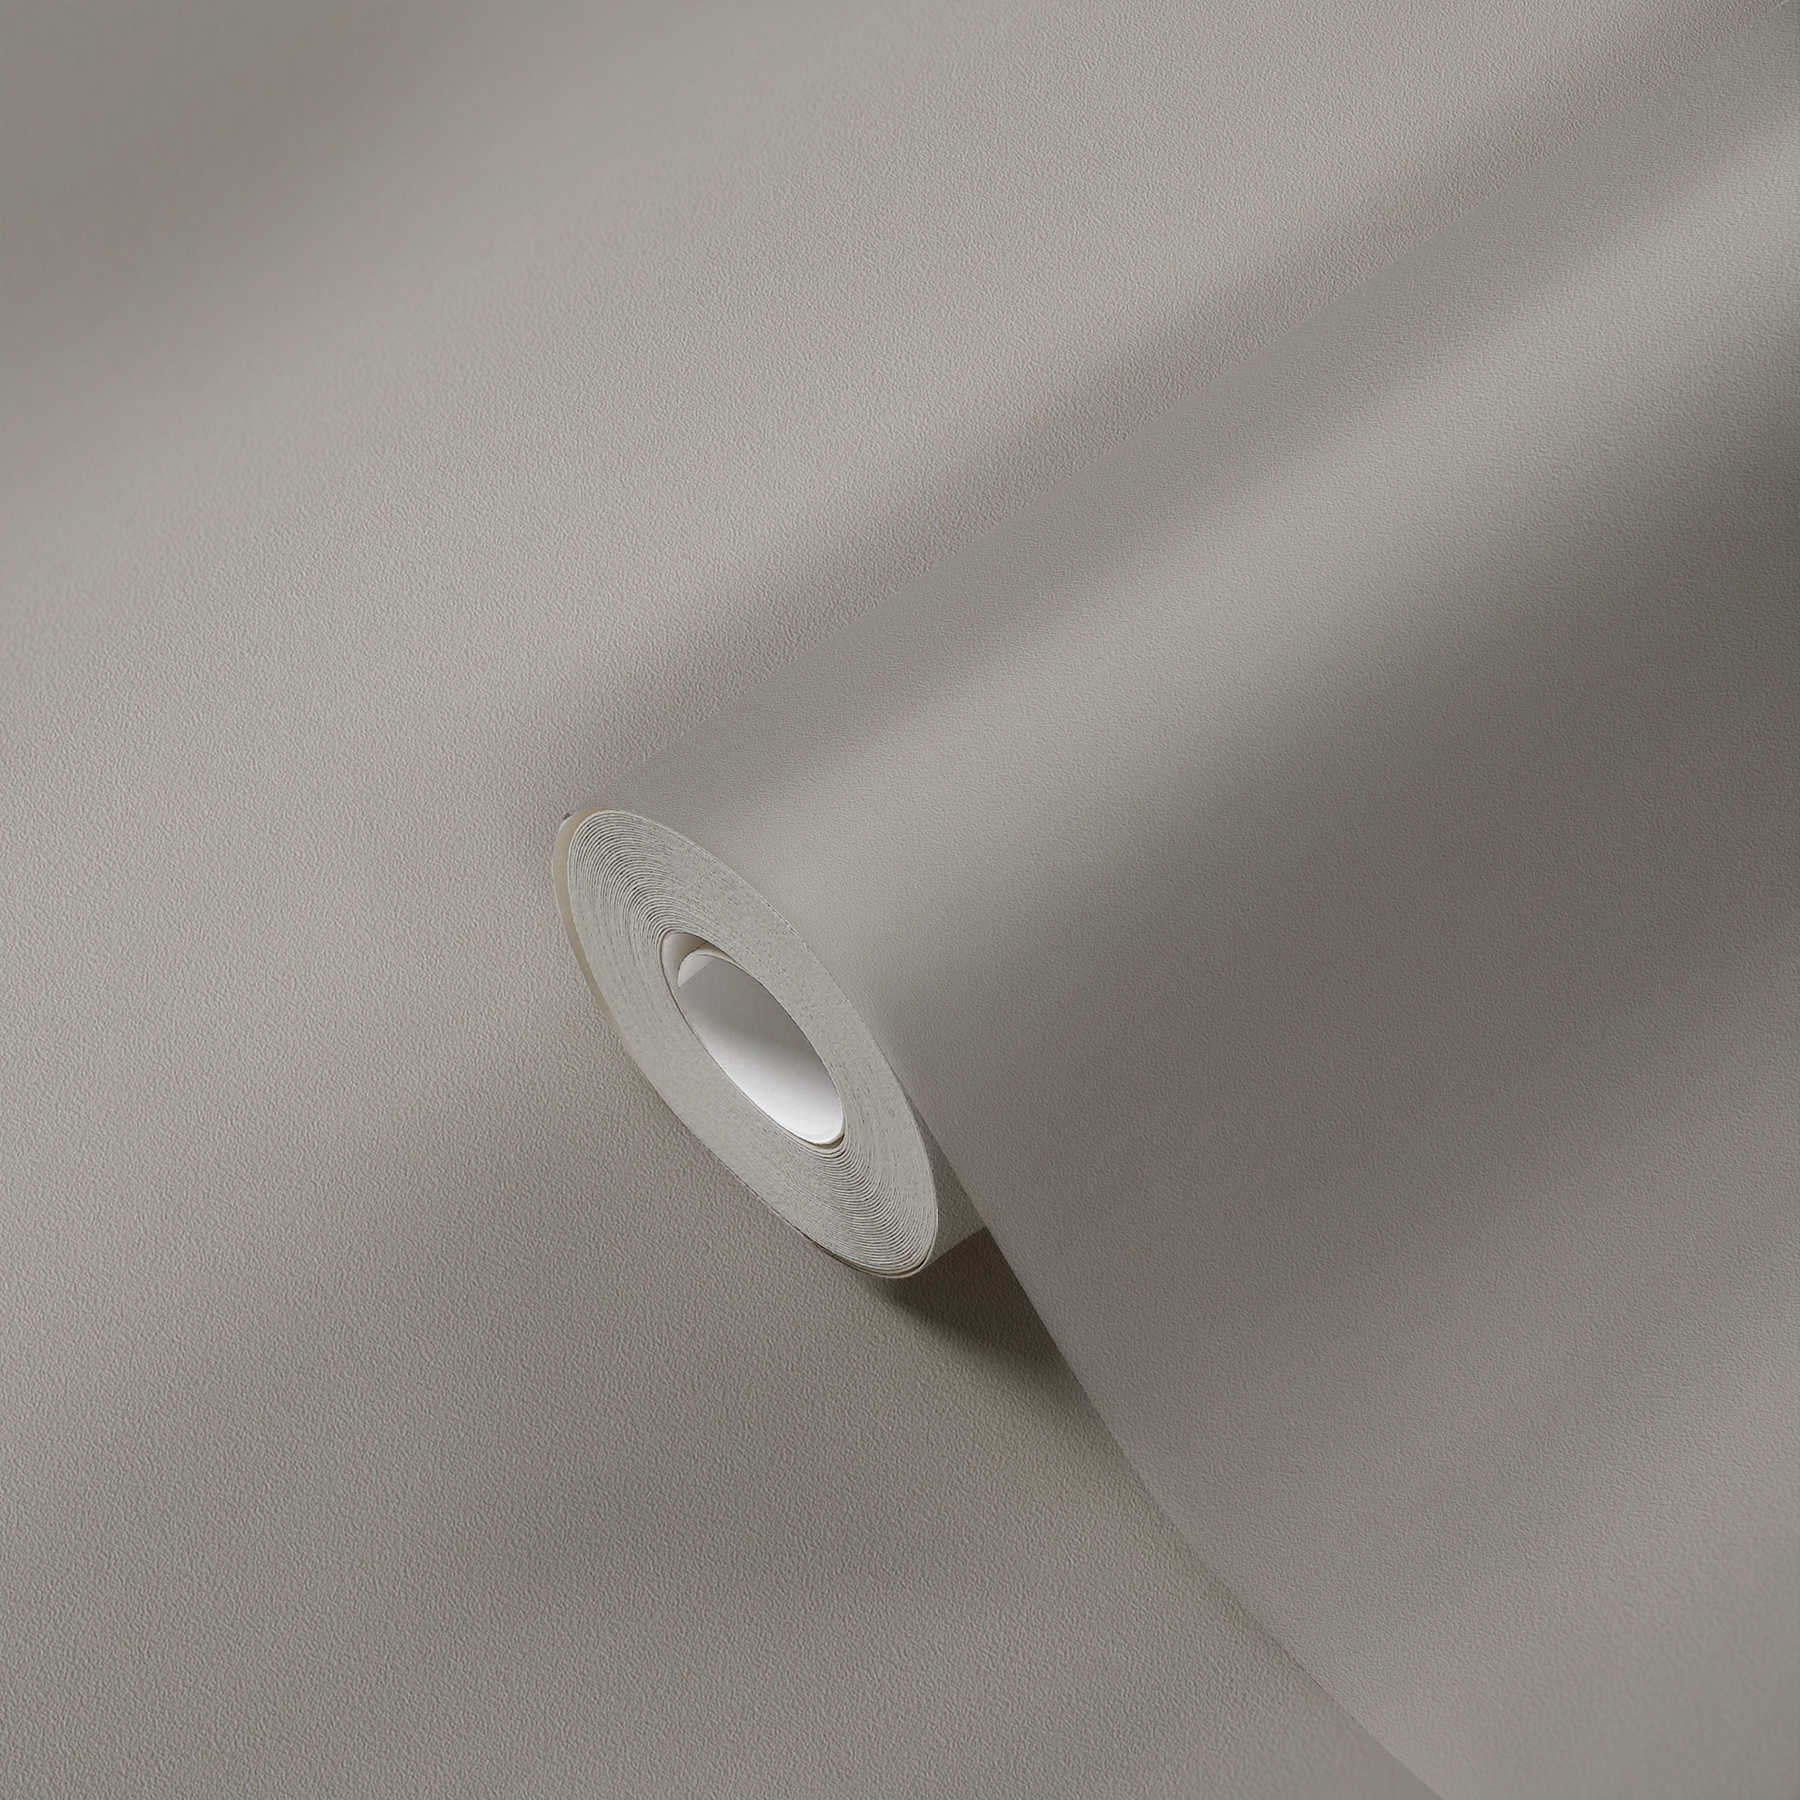             Wallpaper taupe monochrome & matte, grey-beige shade
        